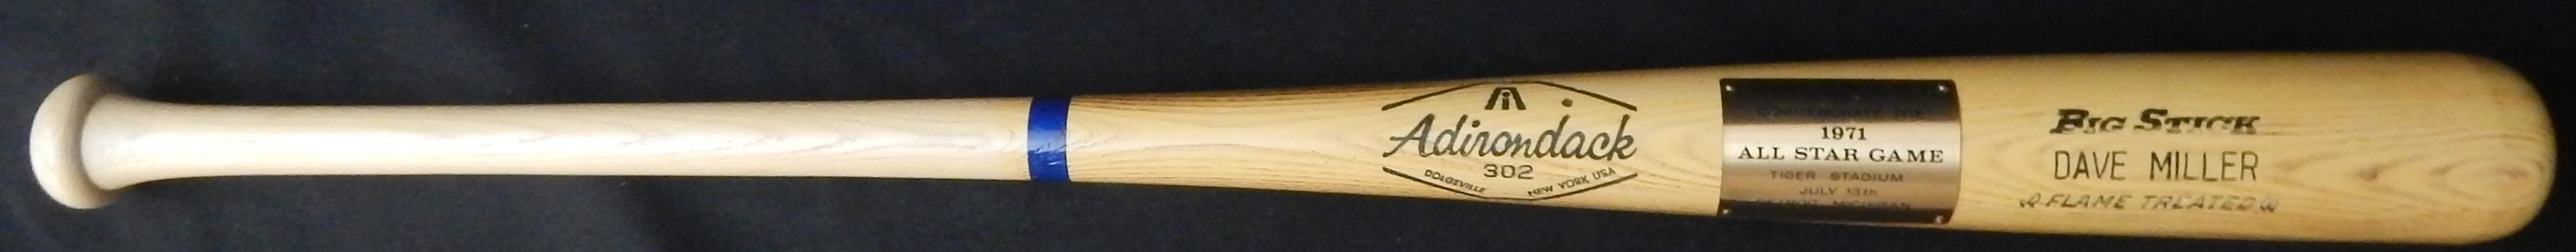 1971 All-Star Game Presentational Bat